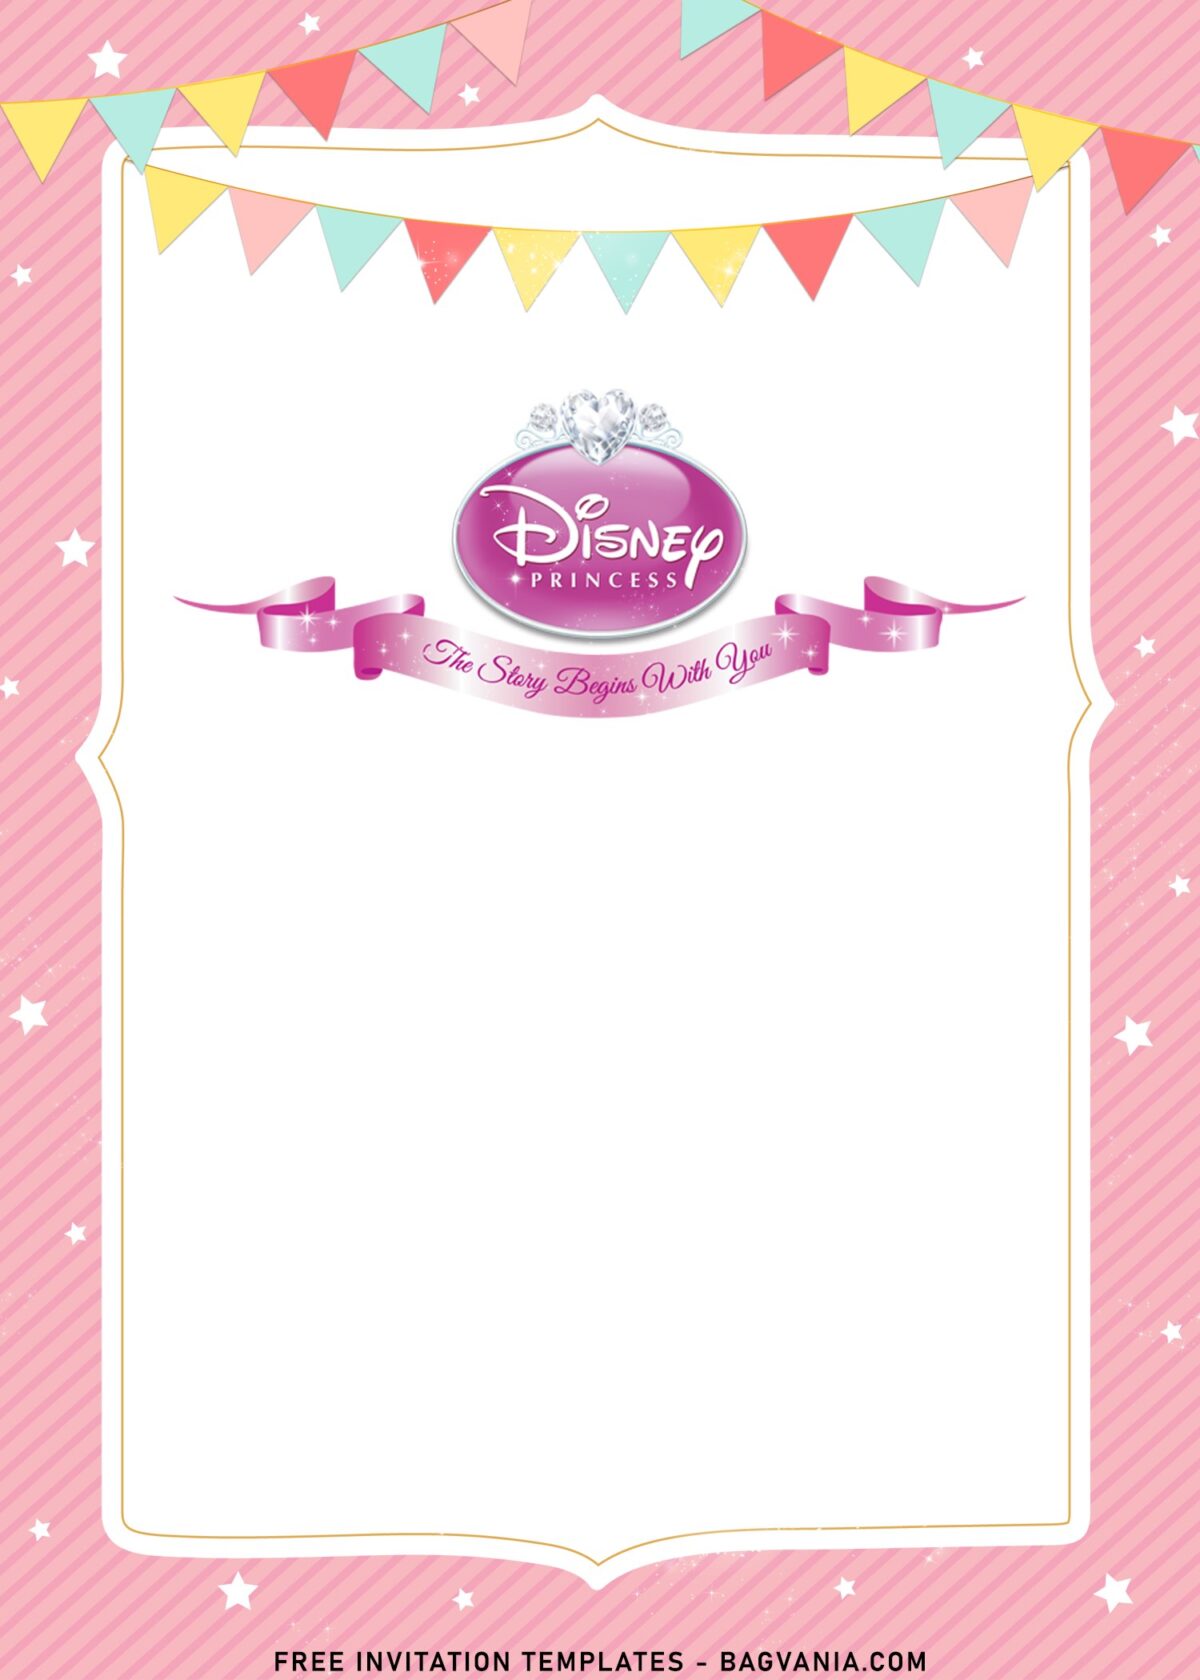 9+ Disney Princess And Castle Birthday Invitation Templates with Disney princess logo